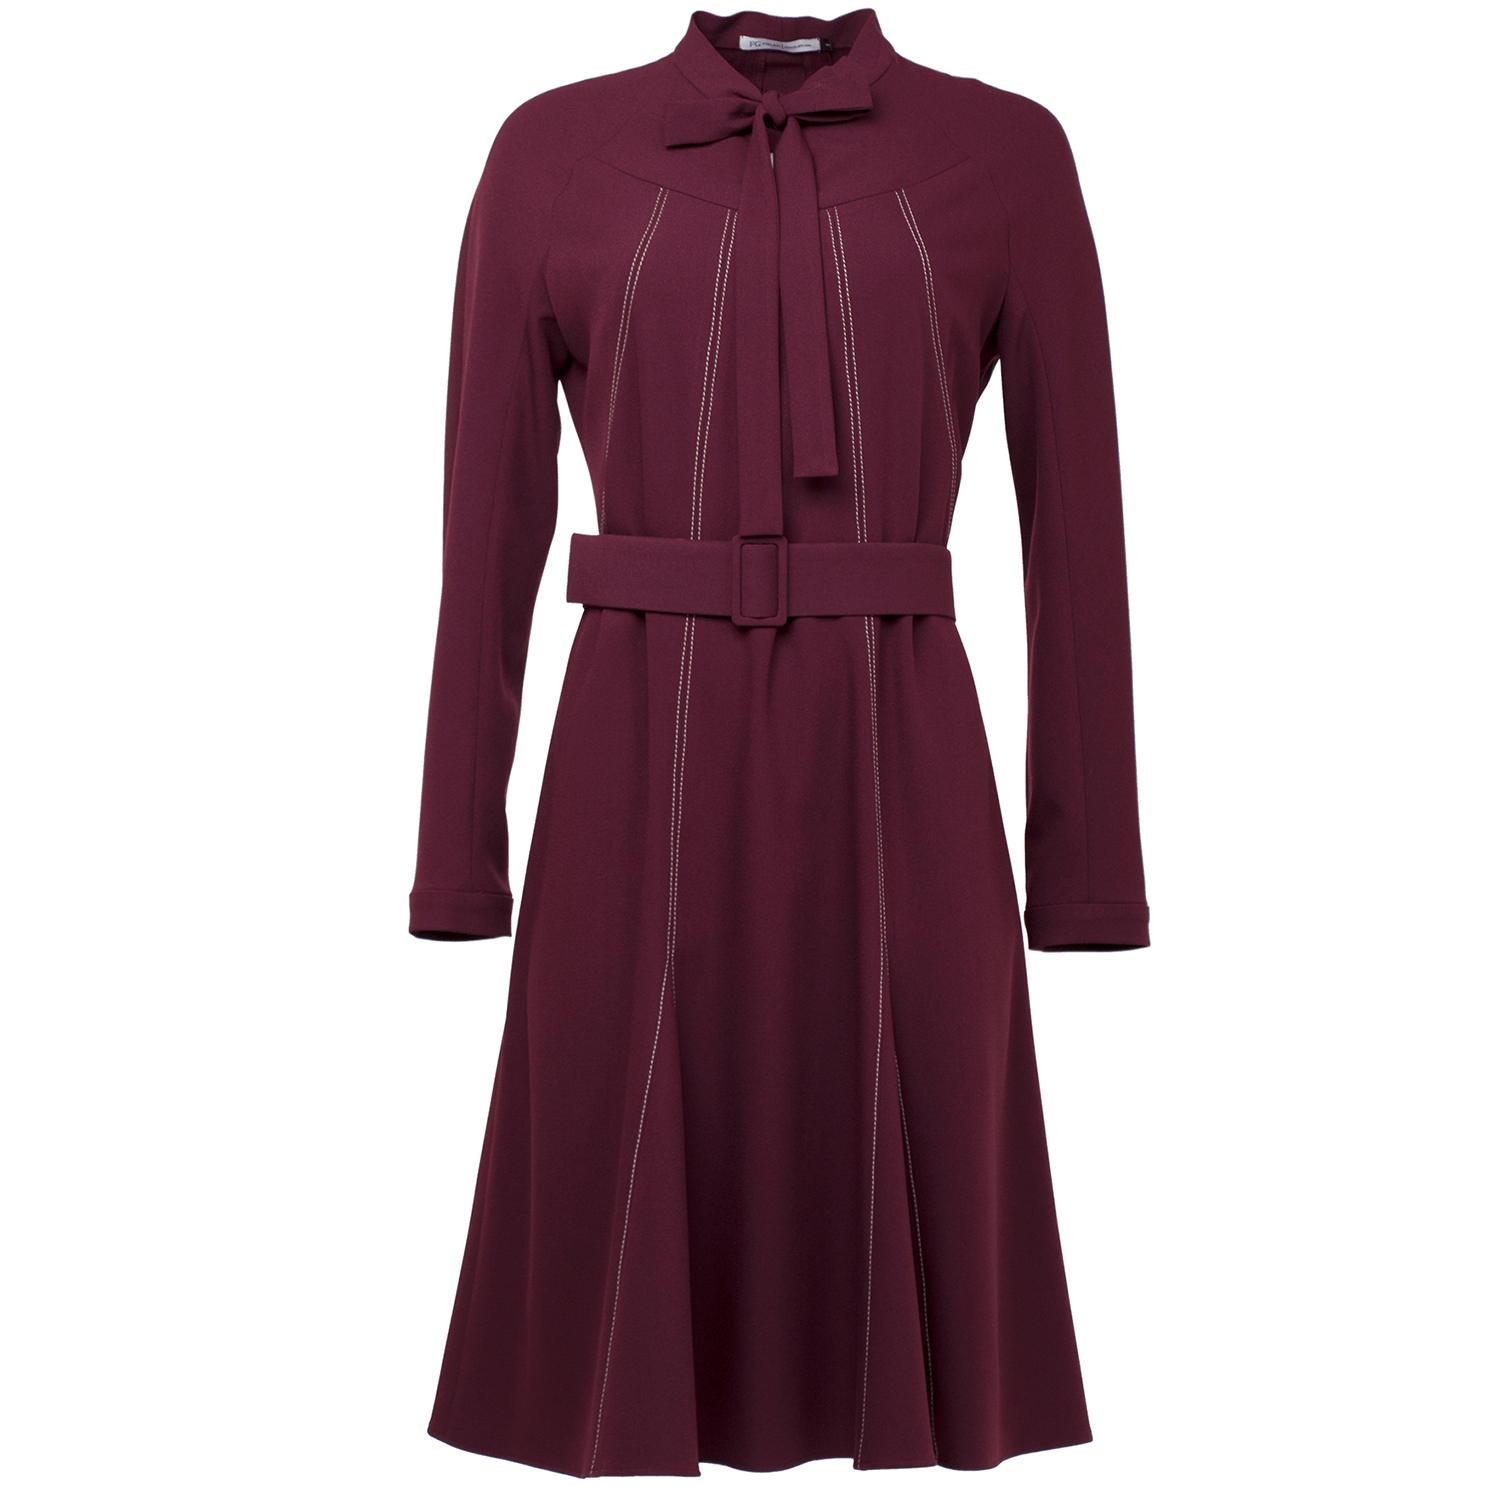 Burgundy Viscose-Blend Crepe Dress with Contrasting Stitch